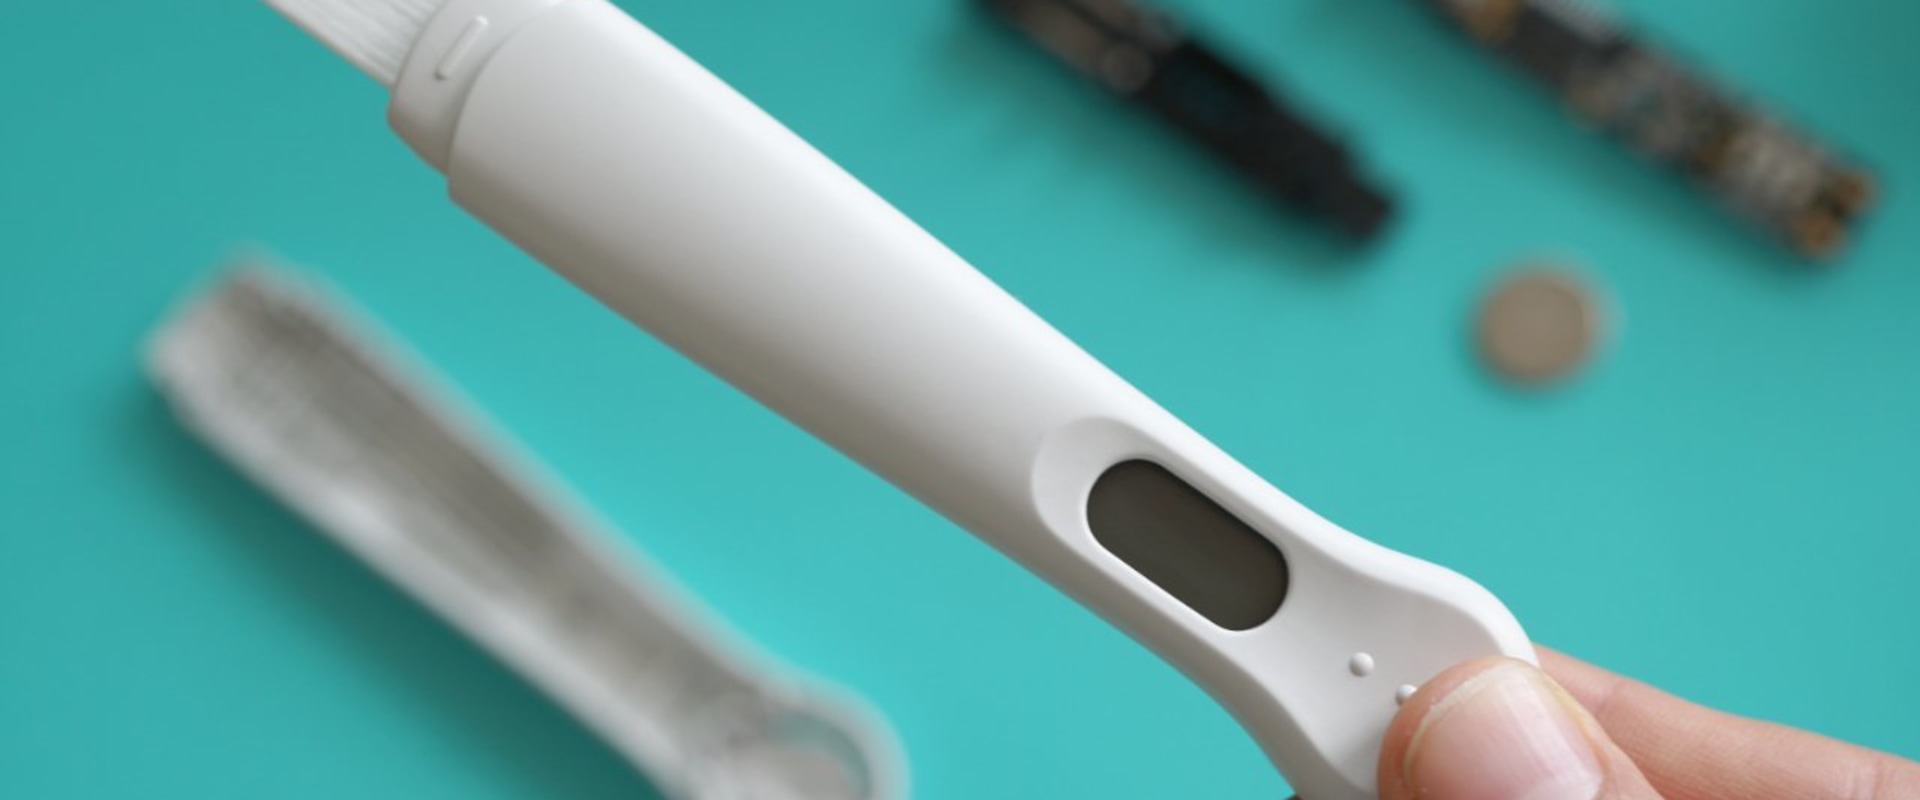 When to do digital pregnancy test?